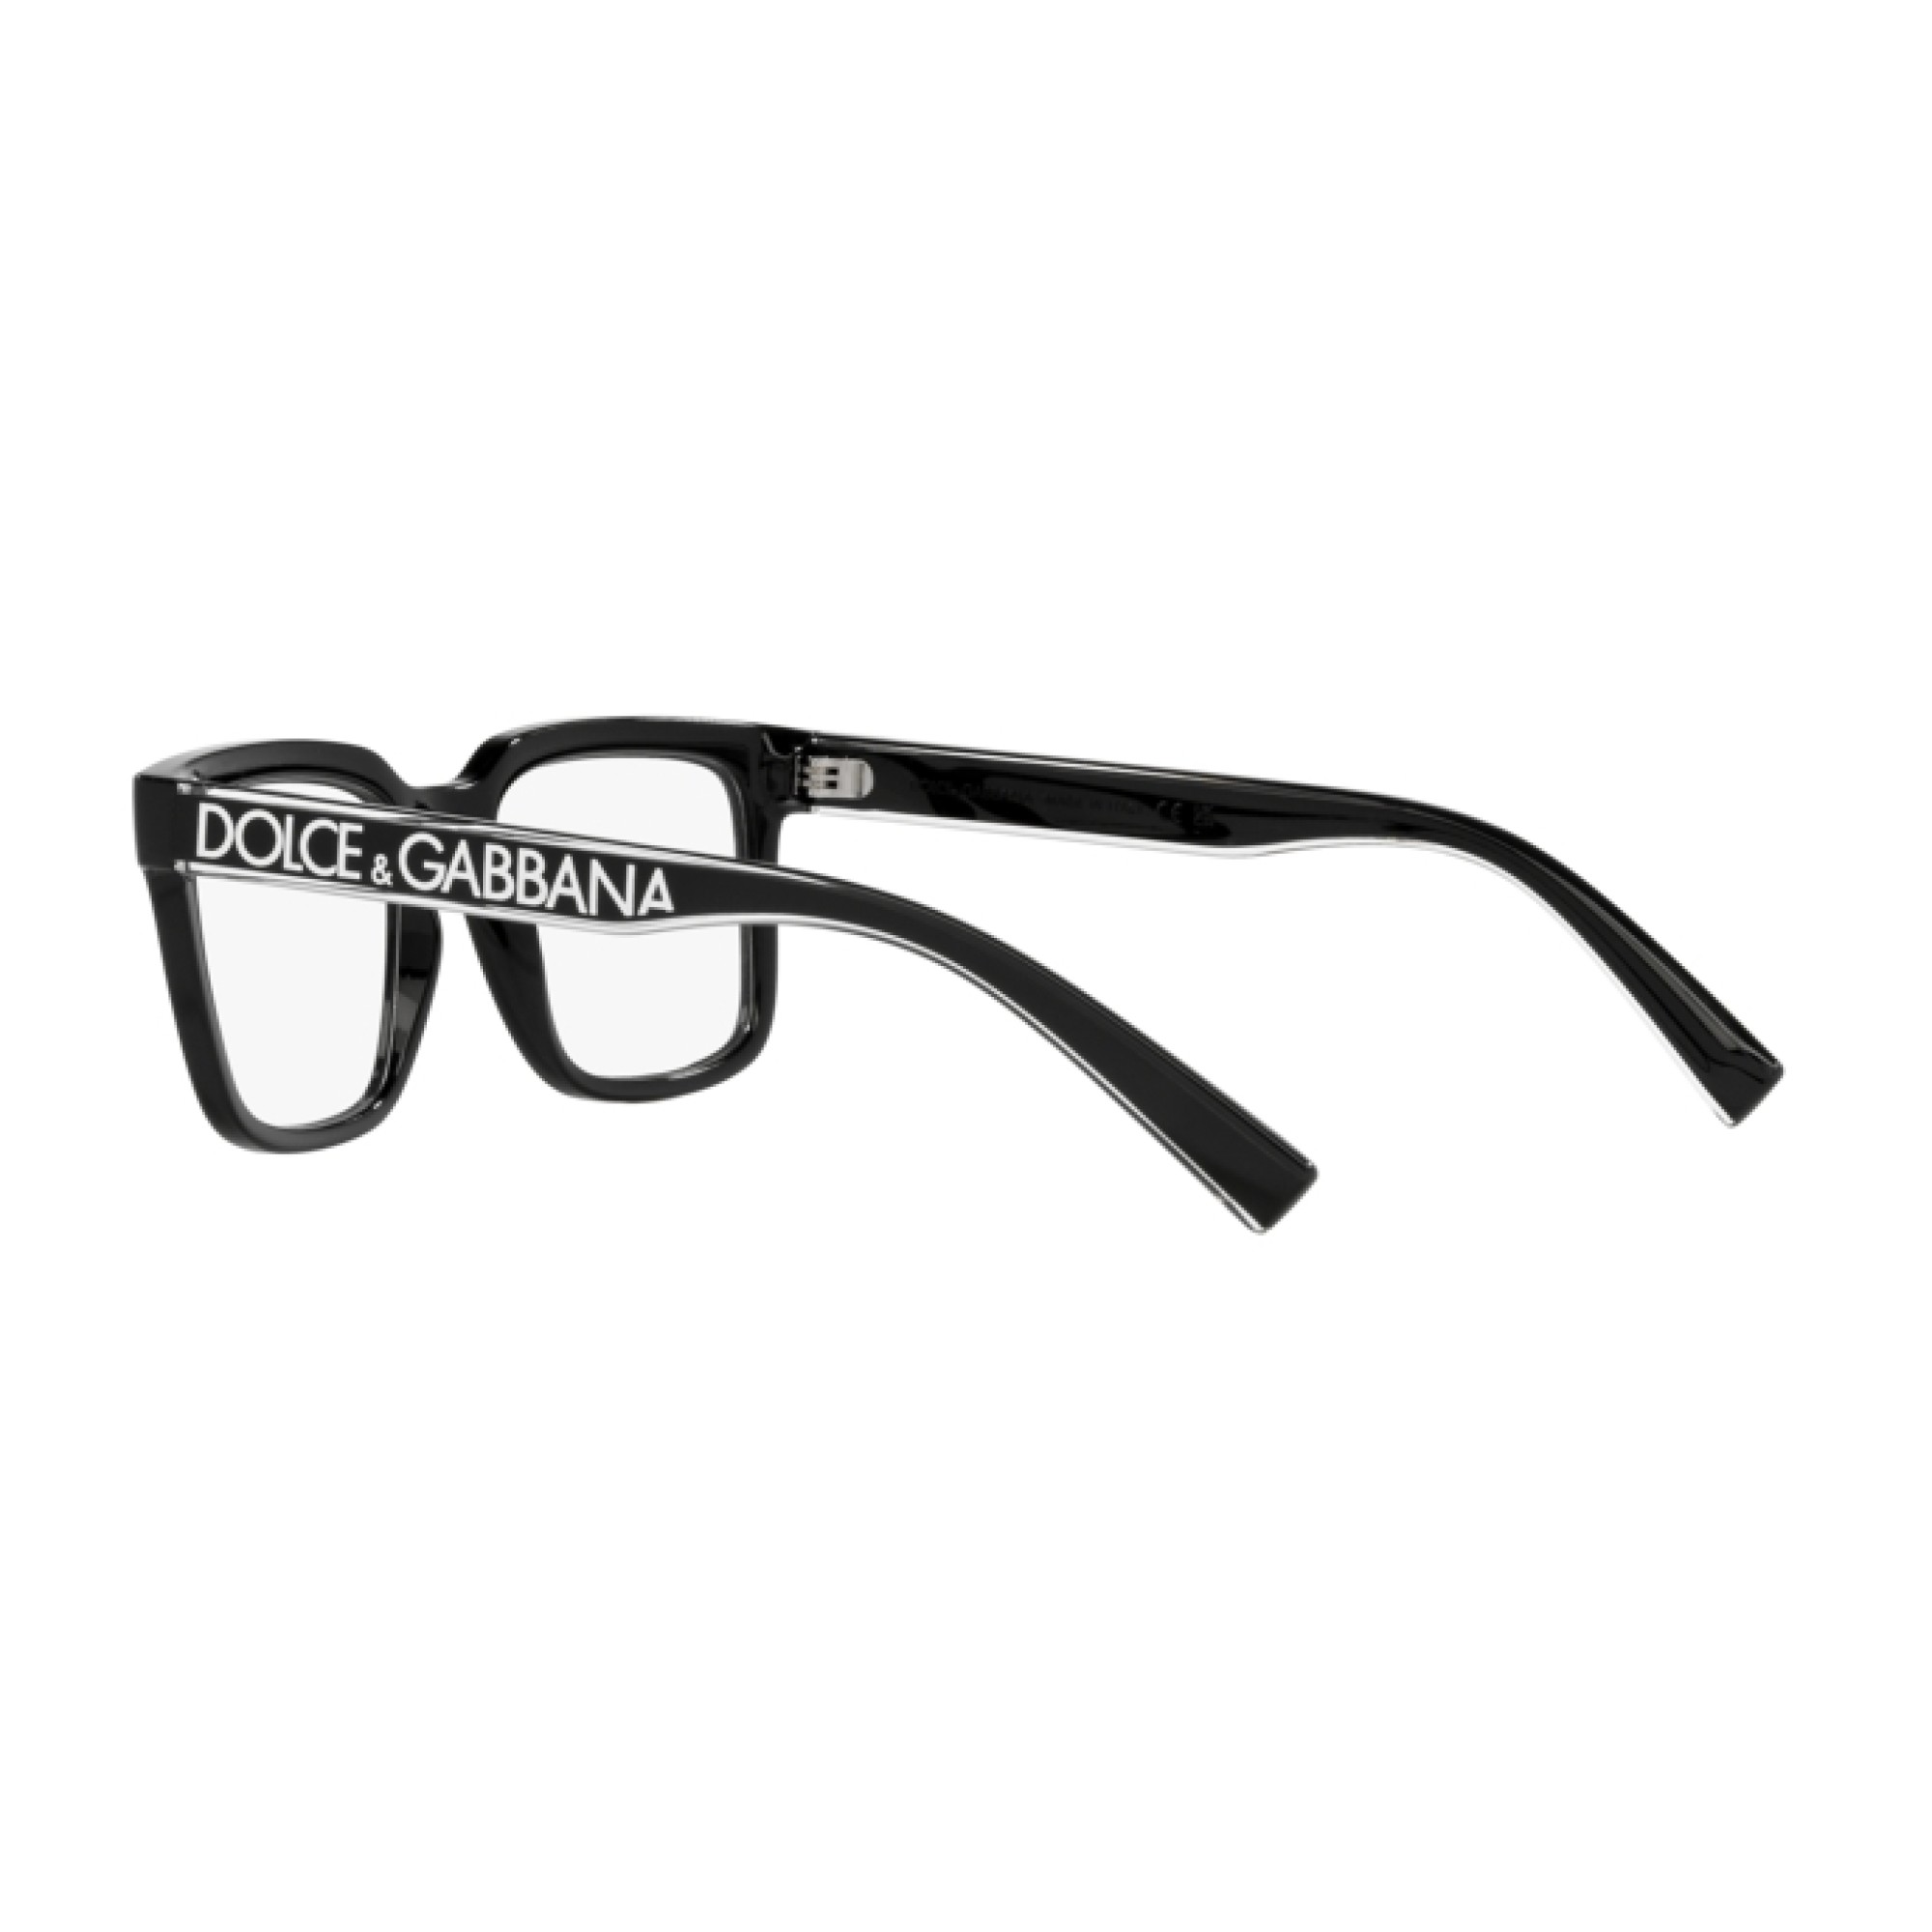 Dolce & Gabbana DG 5101 - 501 Black | Eyeglasses Man